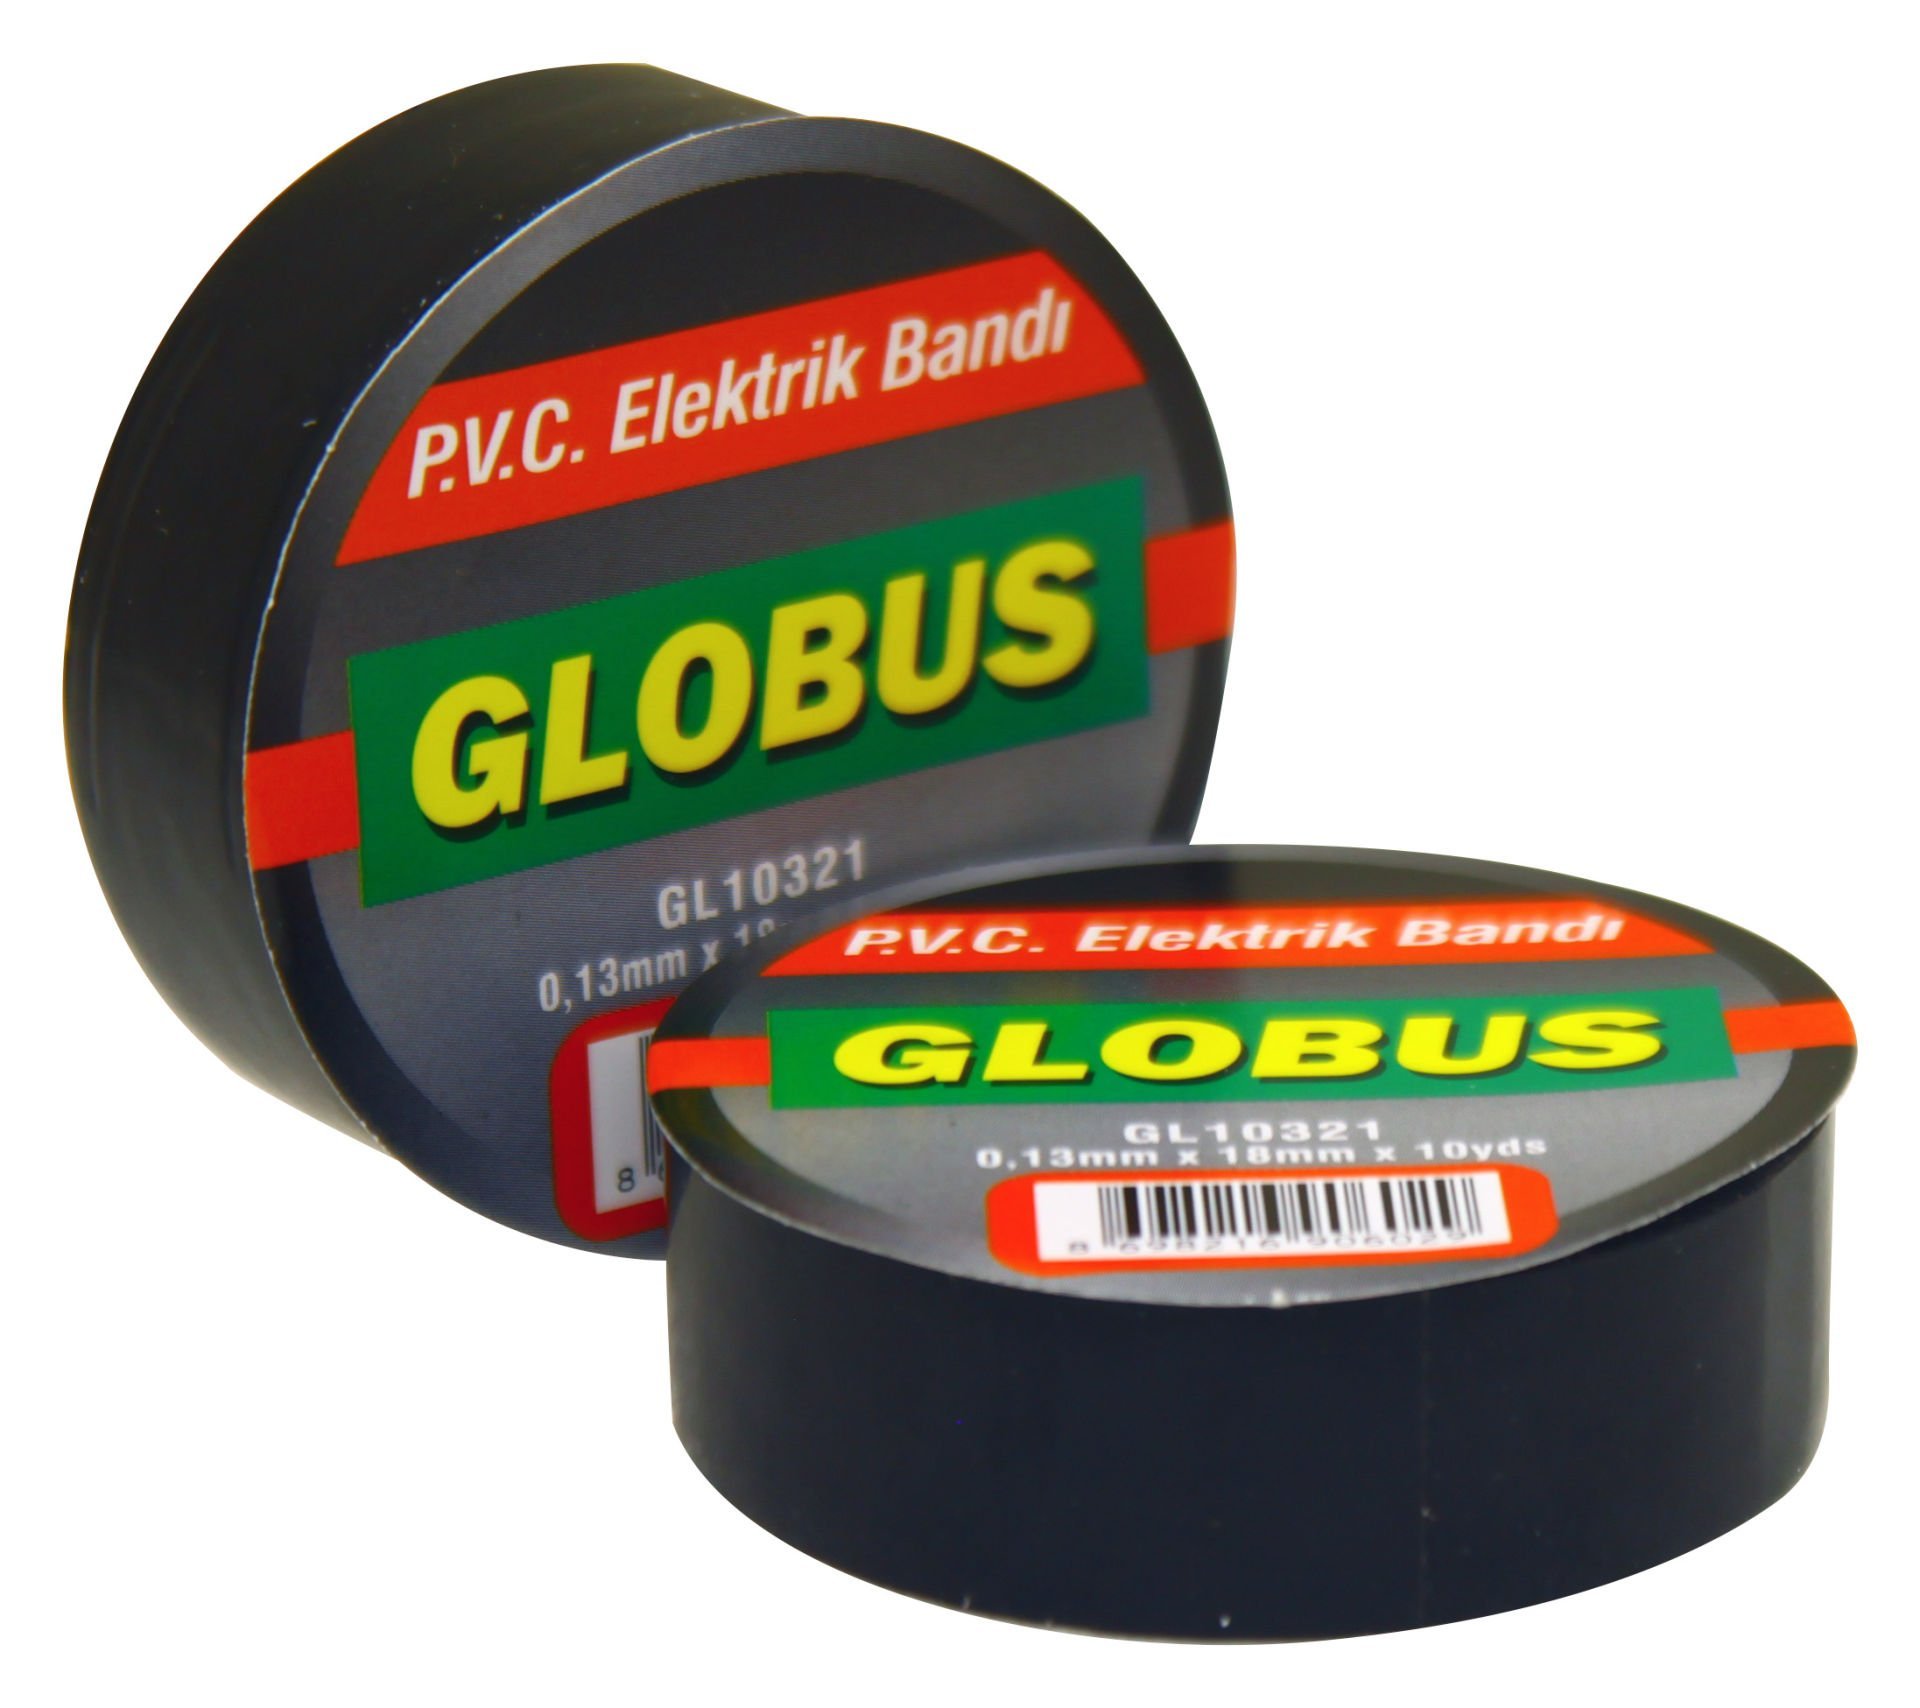 GLOBUS GL10321 PVC ELEKTRİKSEL İZOLASYON BANDI